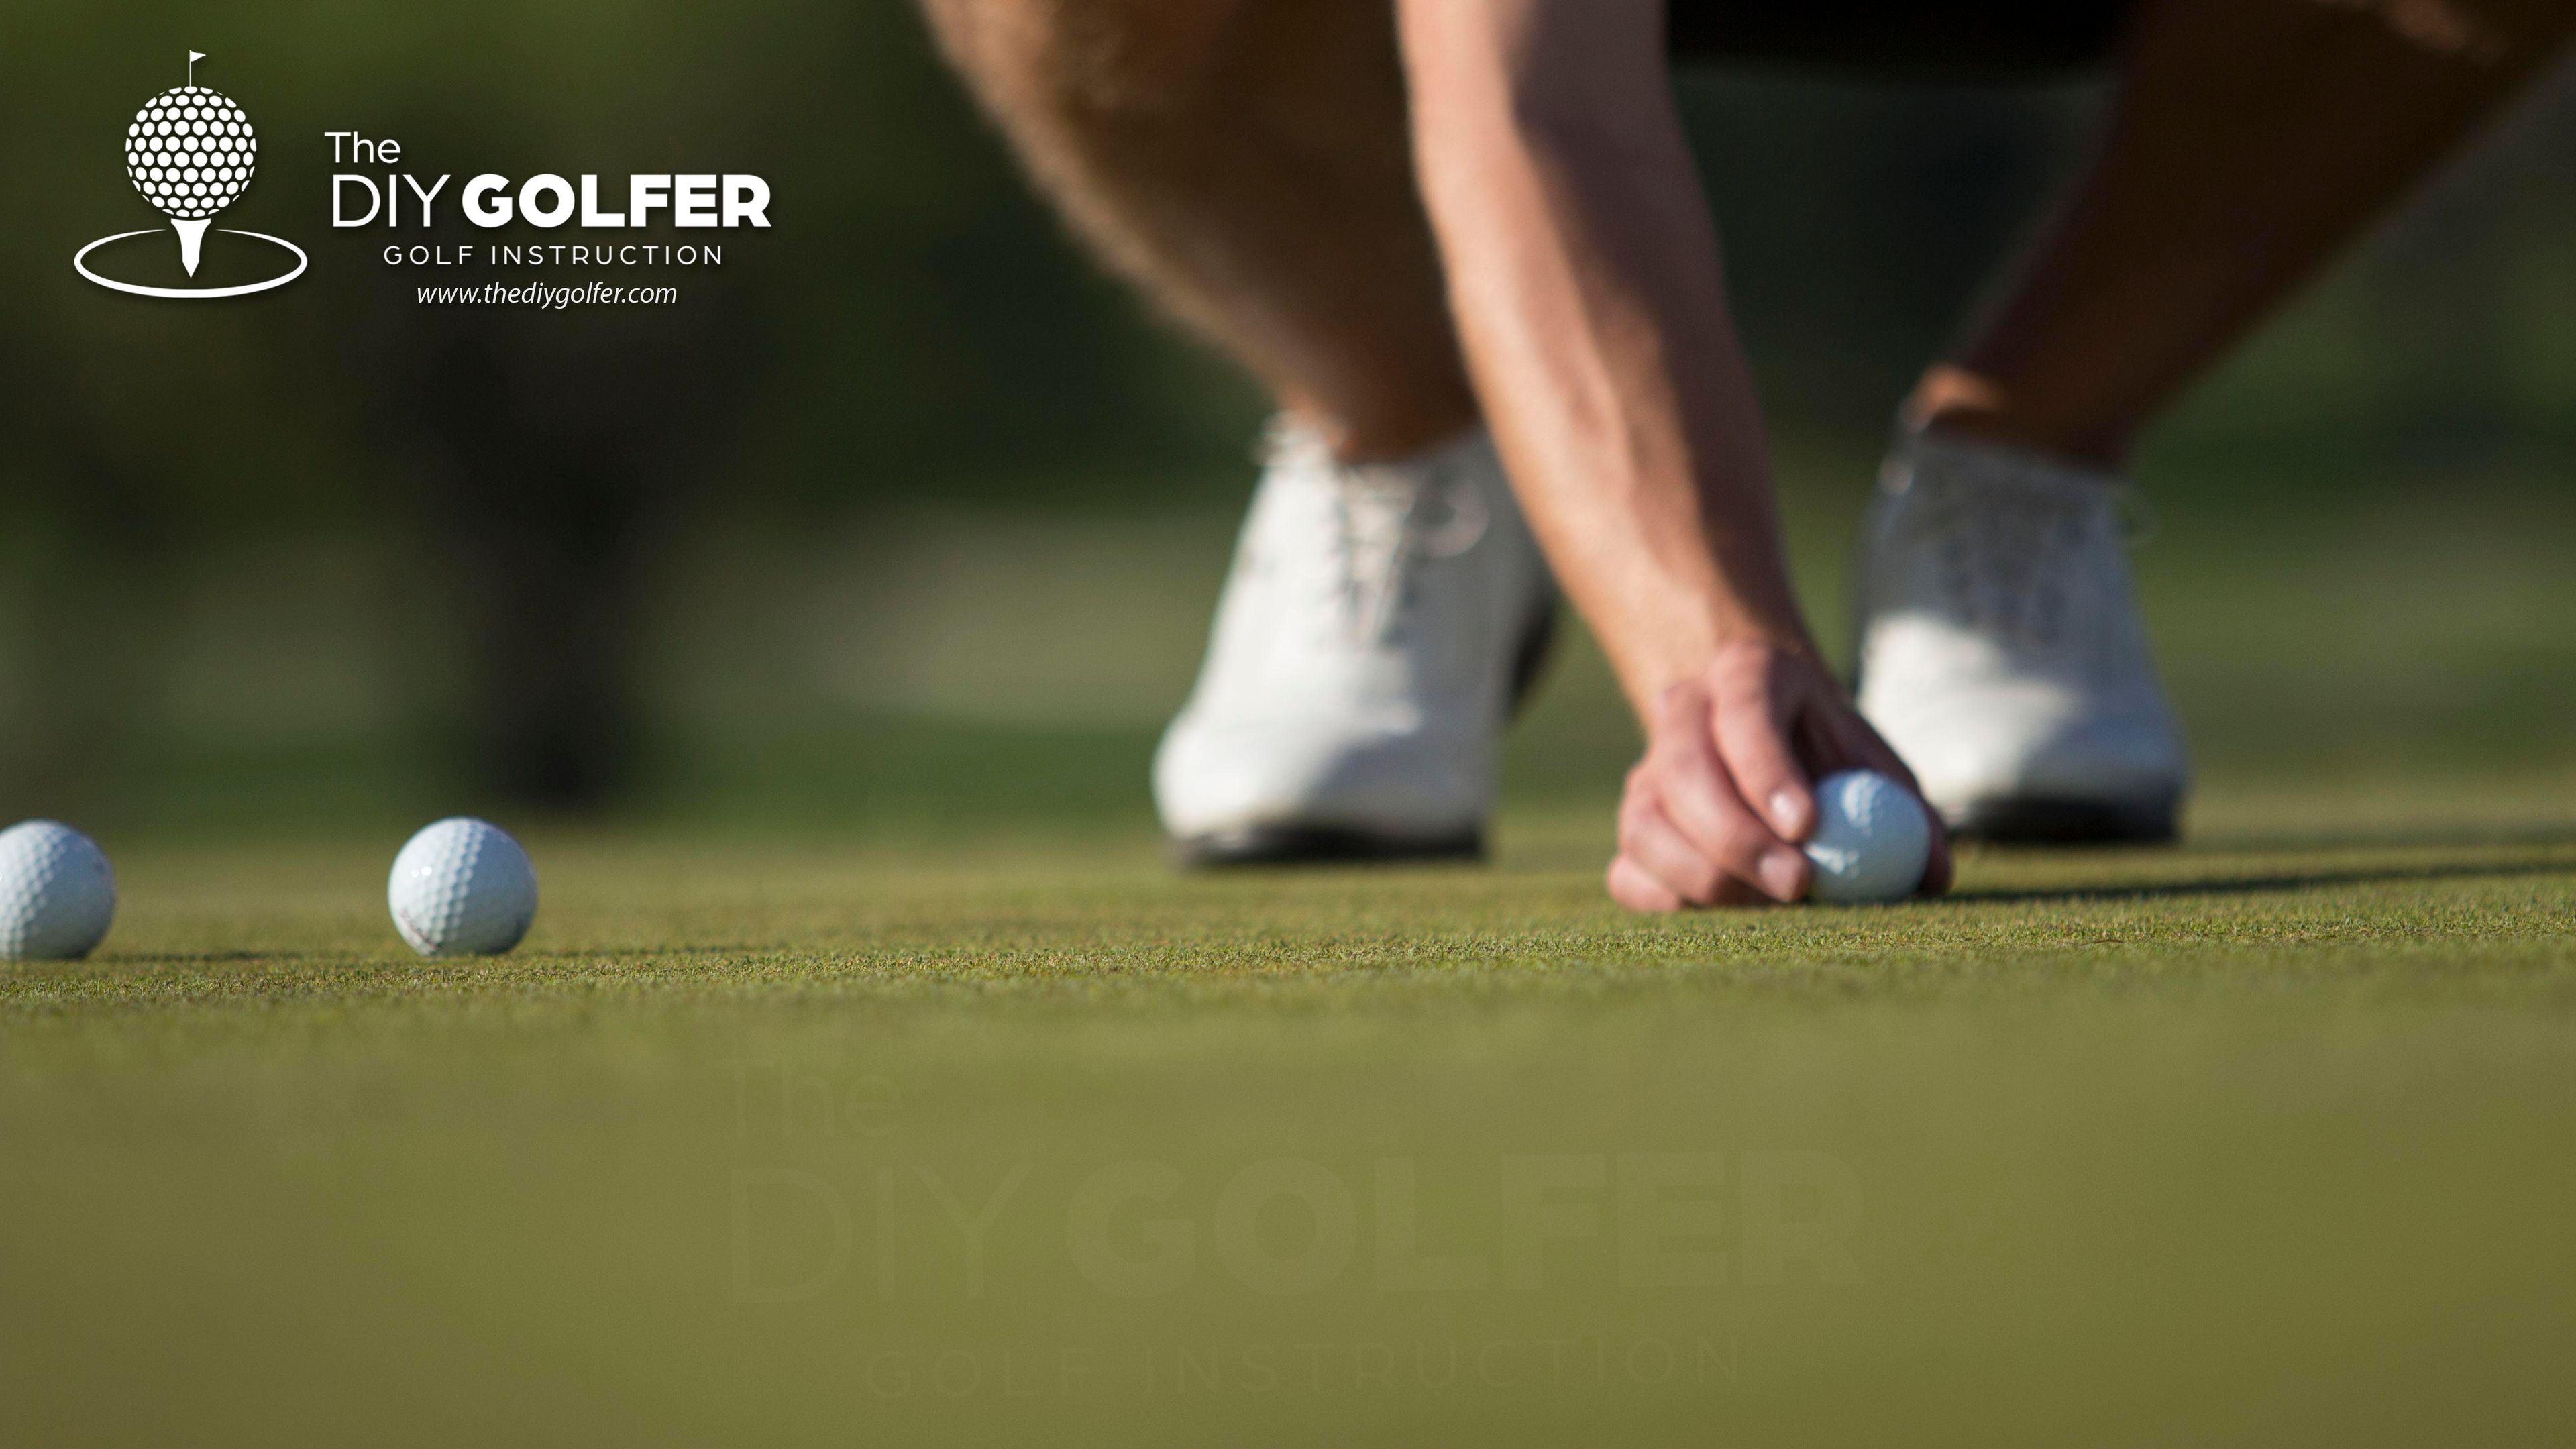 High Definition Golf Putting Photo: Lining up Golf Ball